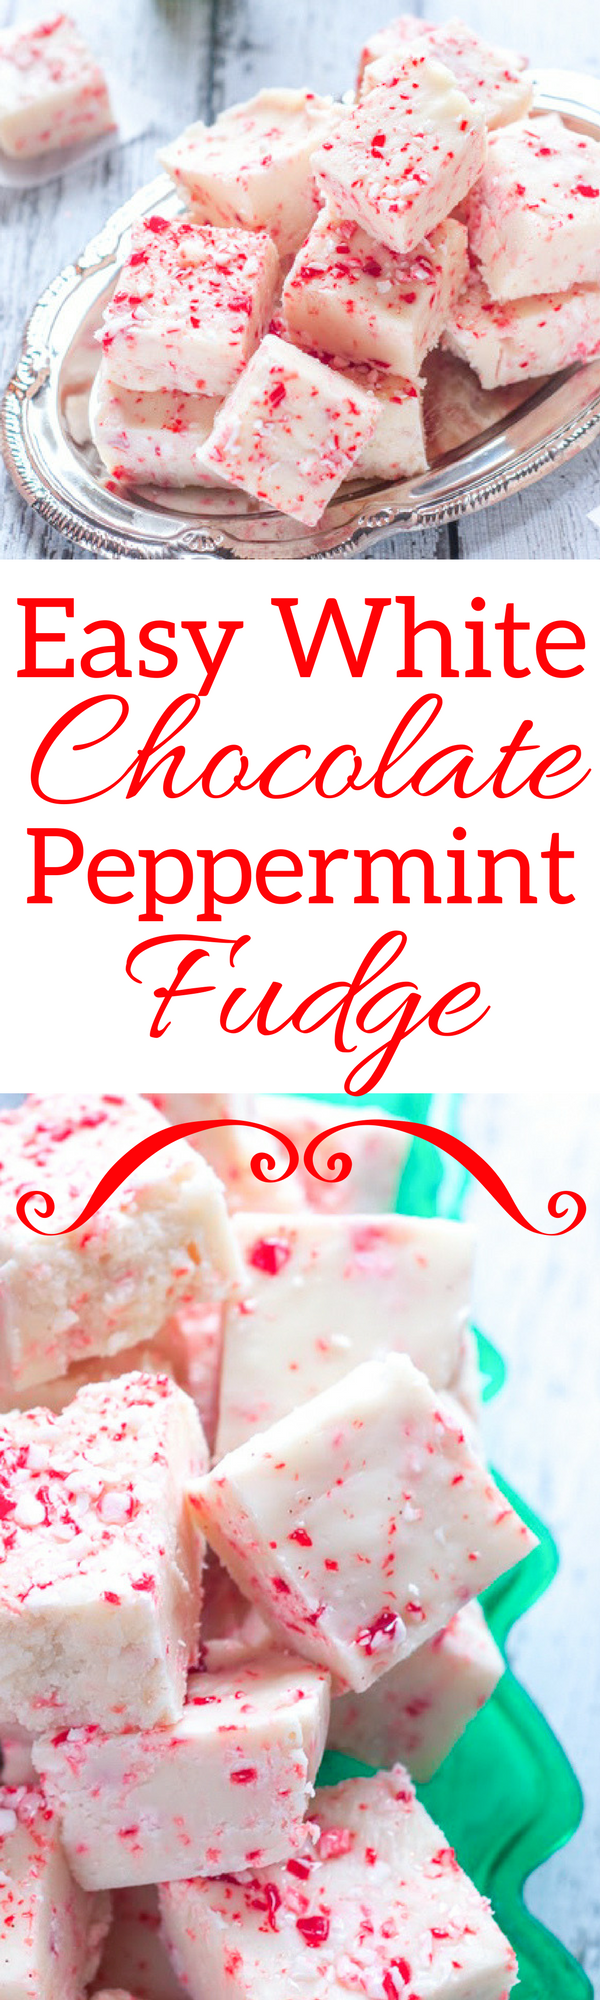 Easy White Chocolate Peppermint Fudge recipe